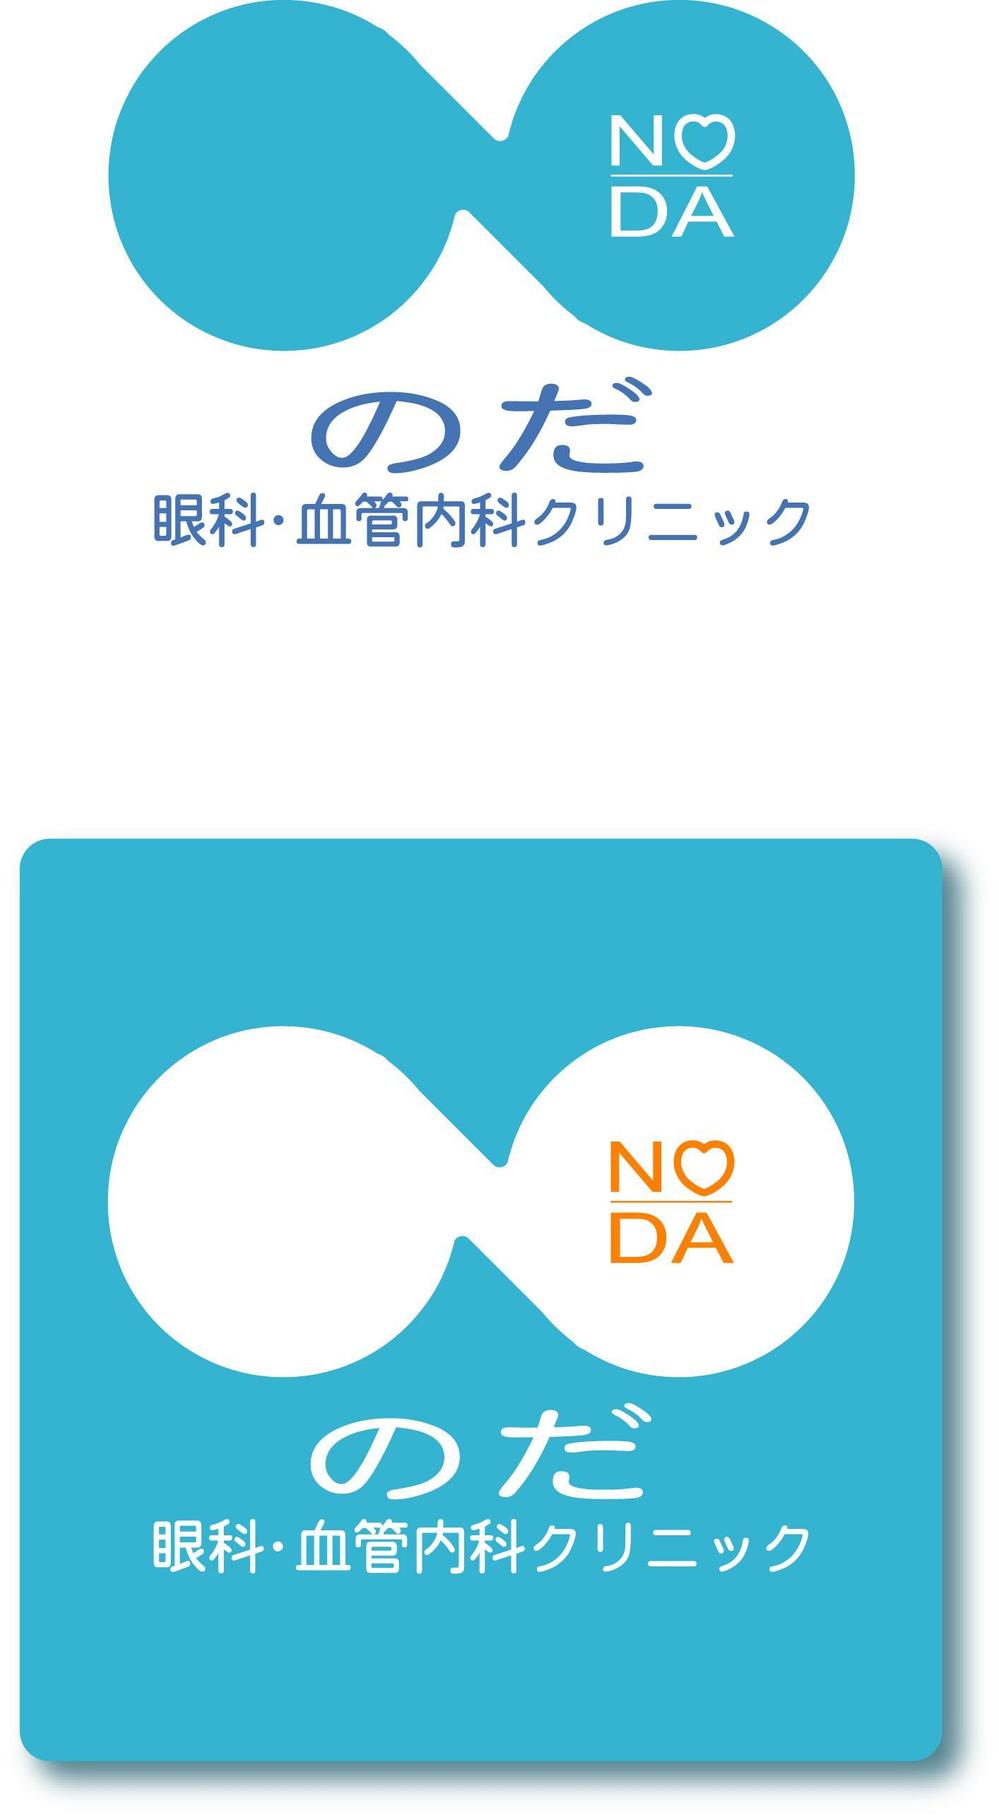 NODA-A.jpg